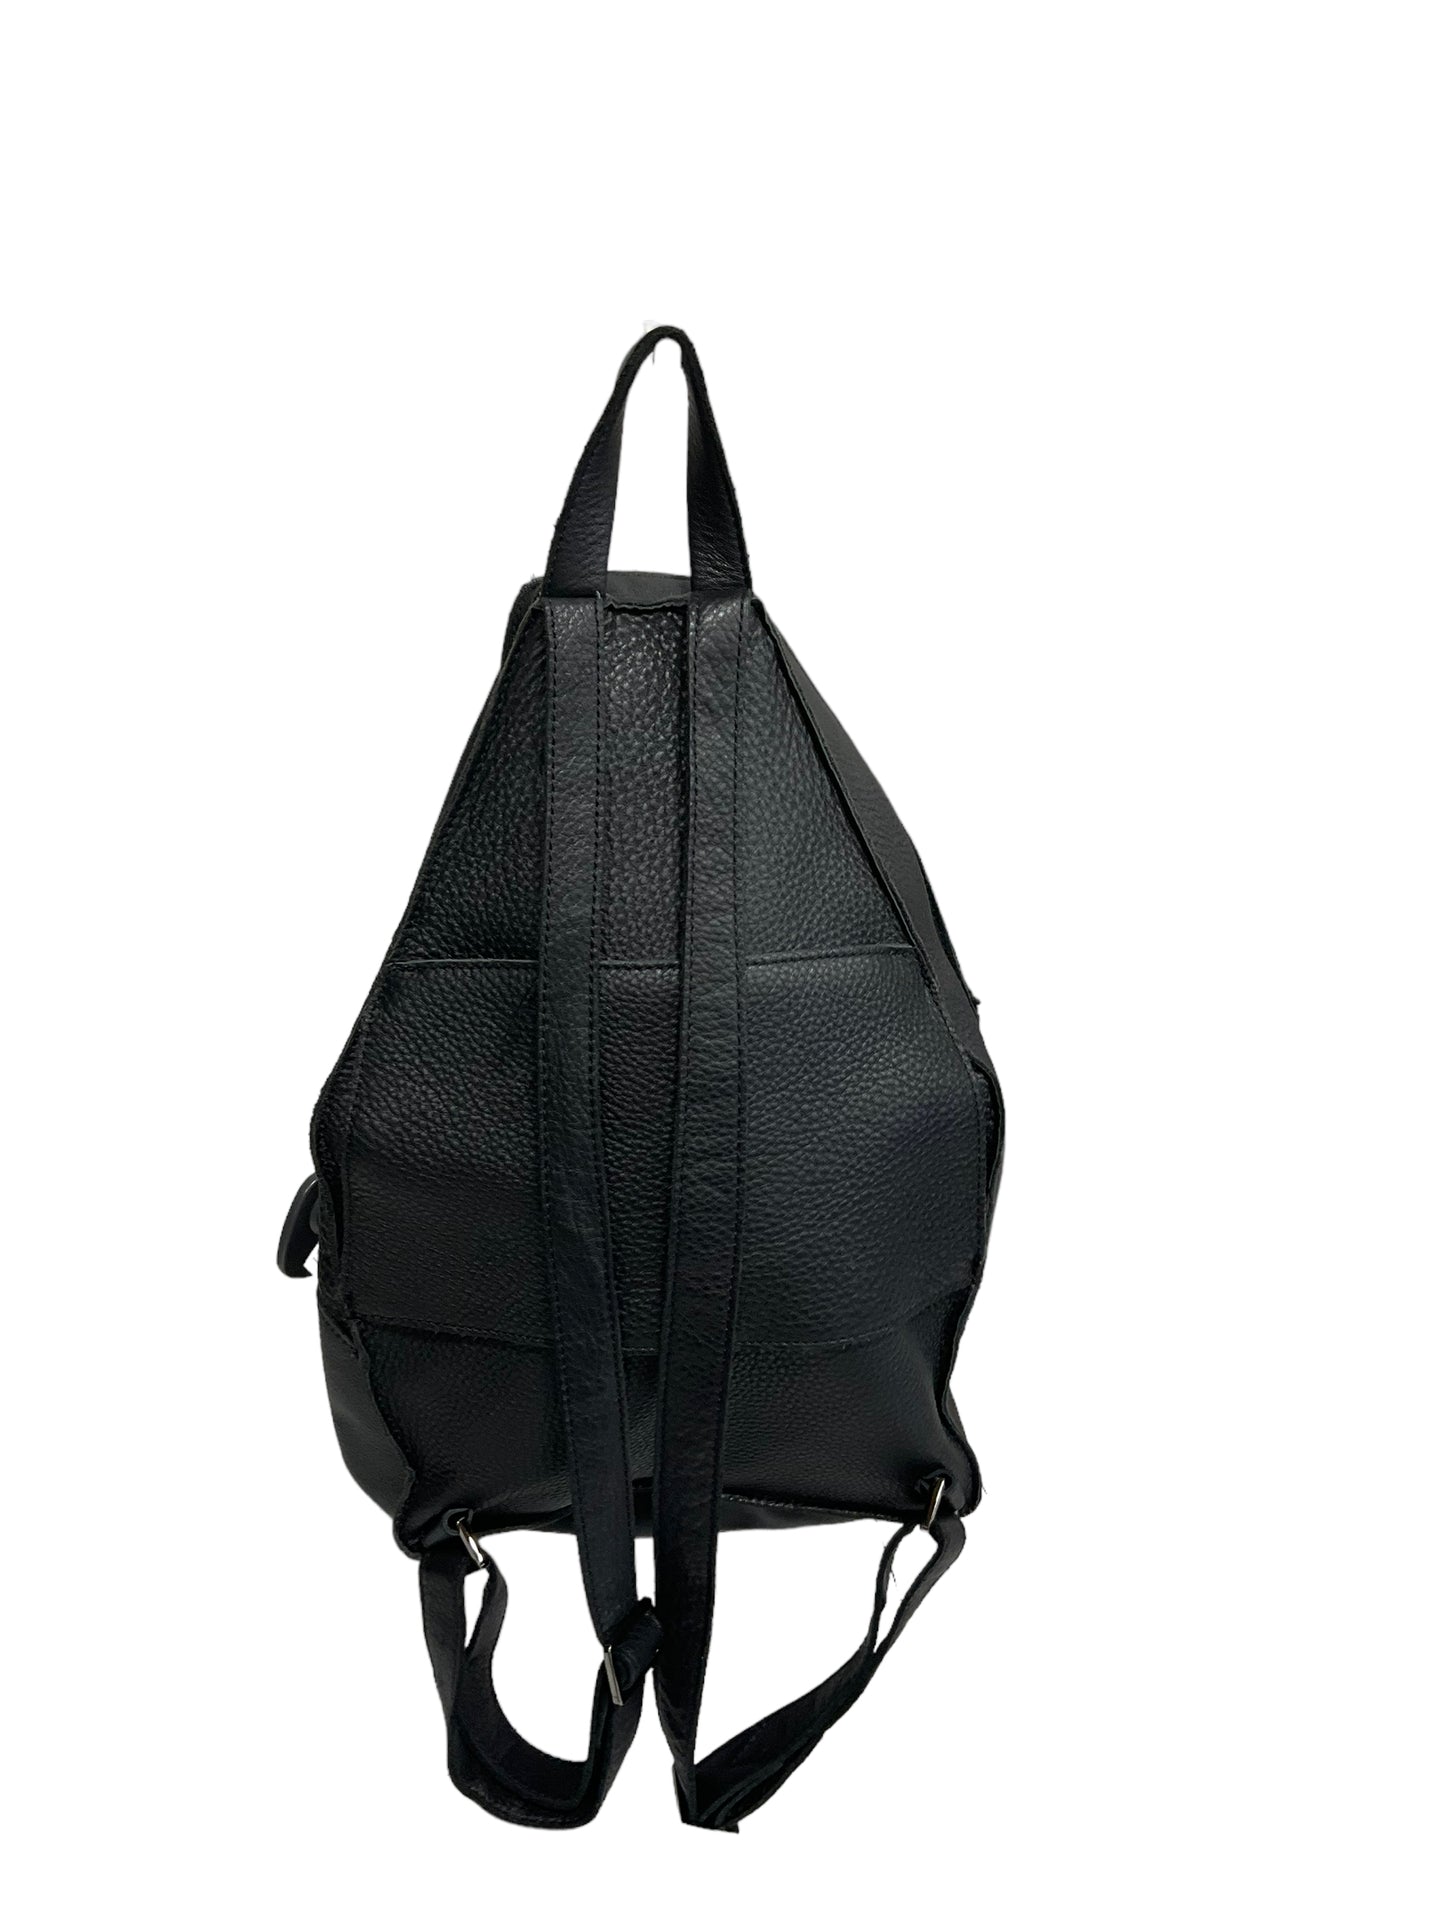 Backpack Designer By Hammitt  Size: Large